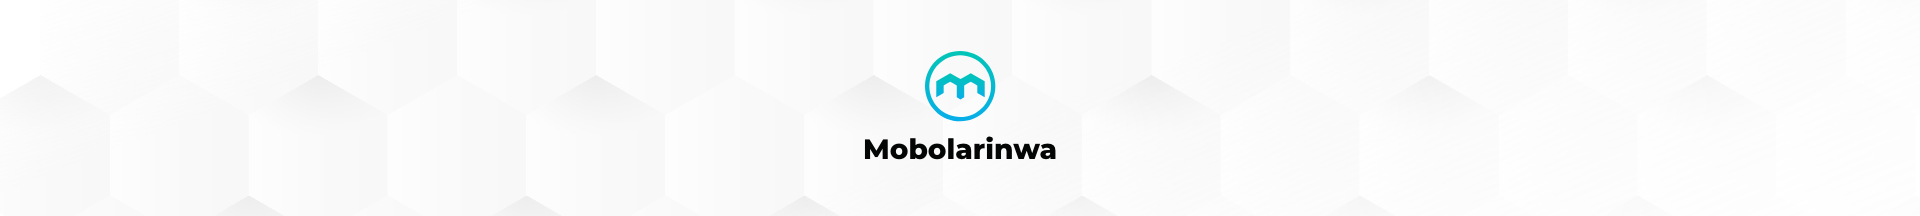 Mobolarinwa Fakeyede's profile banner